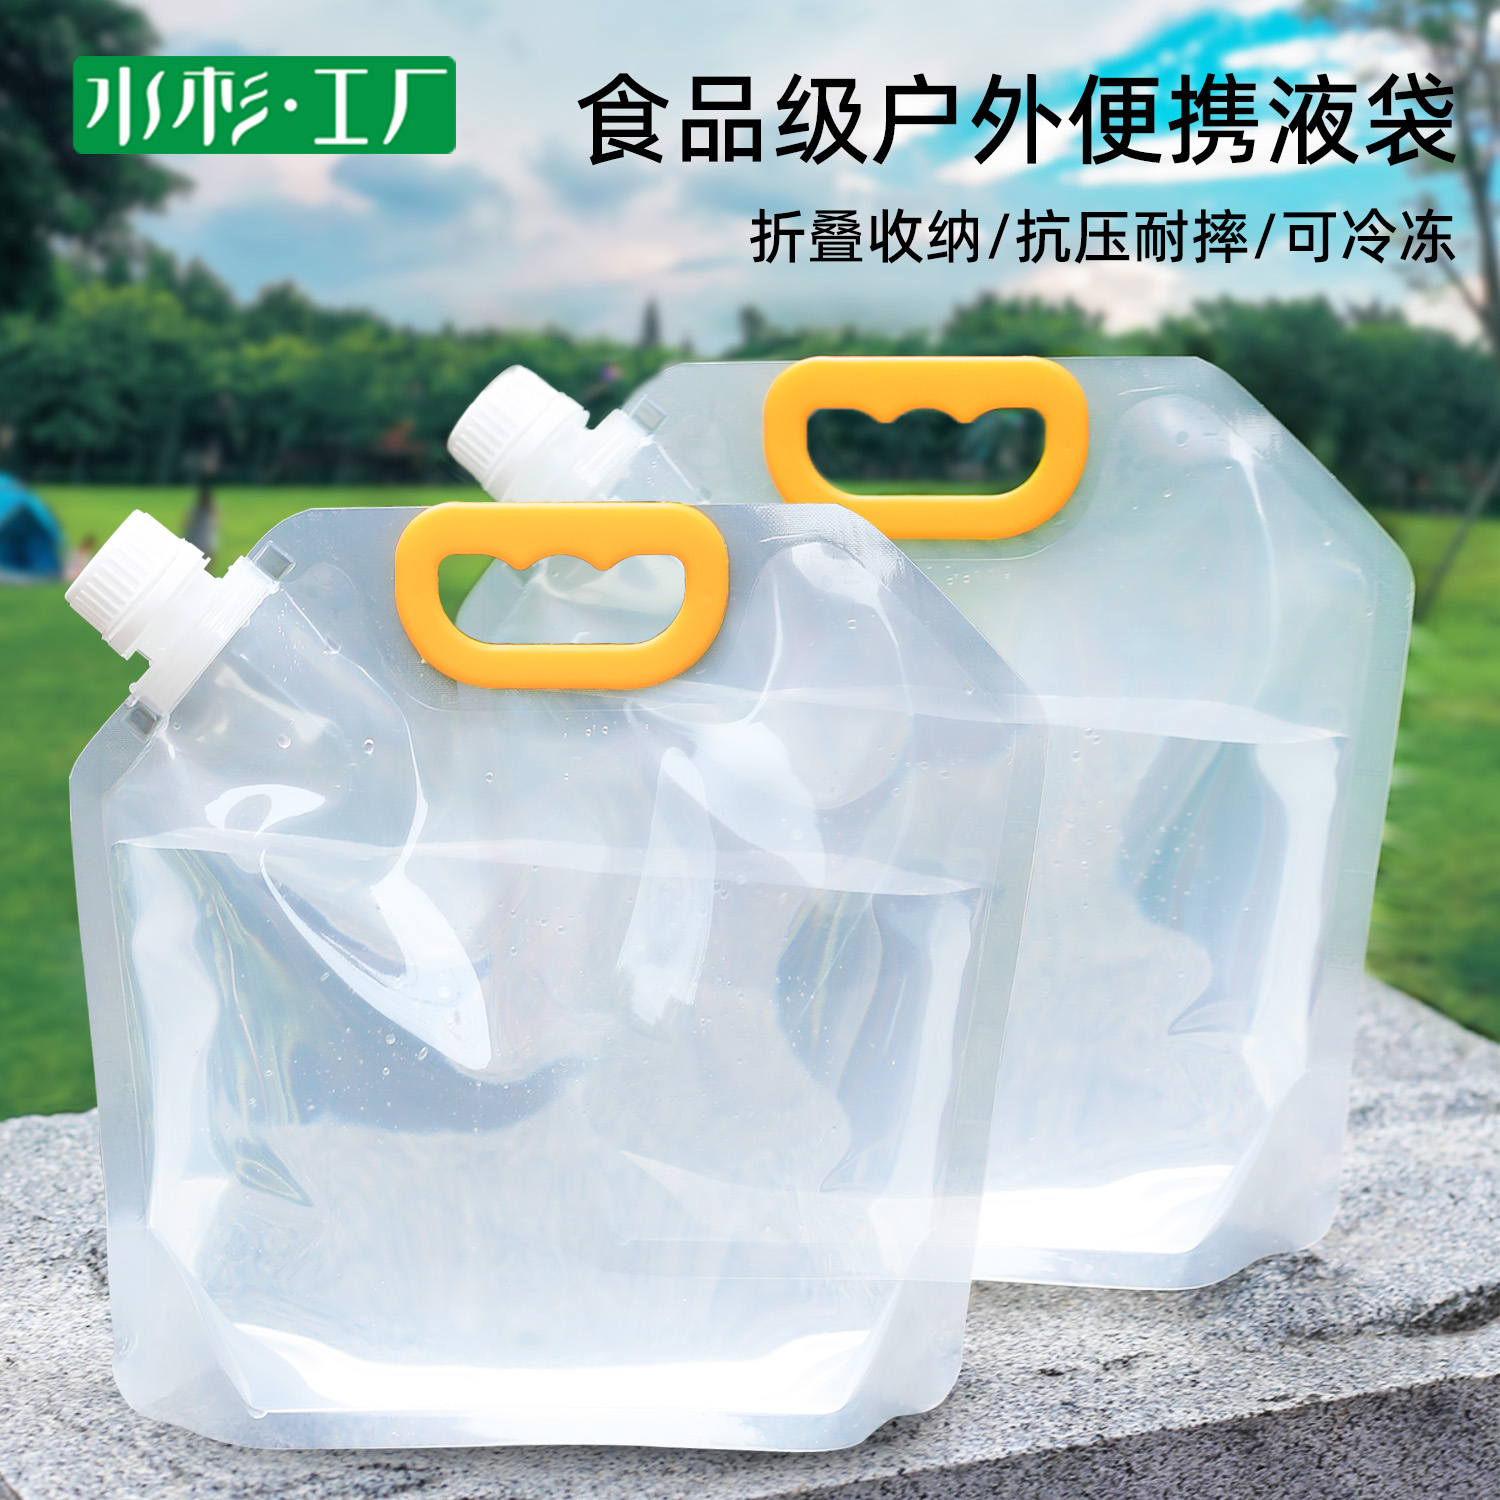 CamelBak发布全新款储水袋CRUX 将亮相中国展